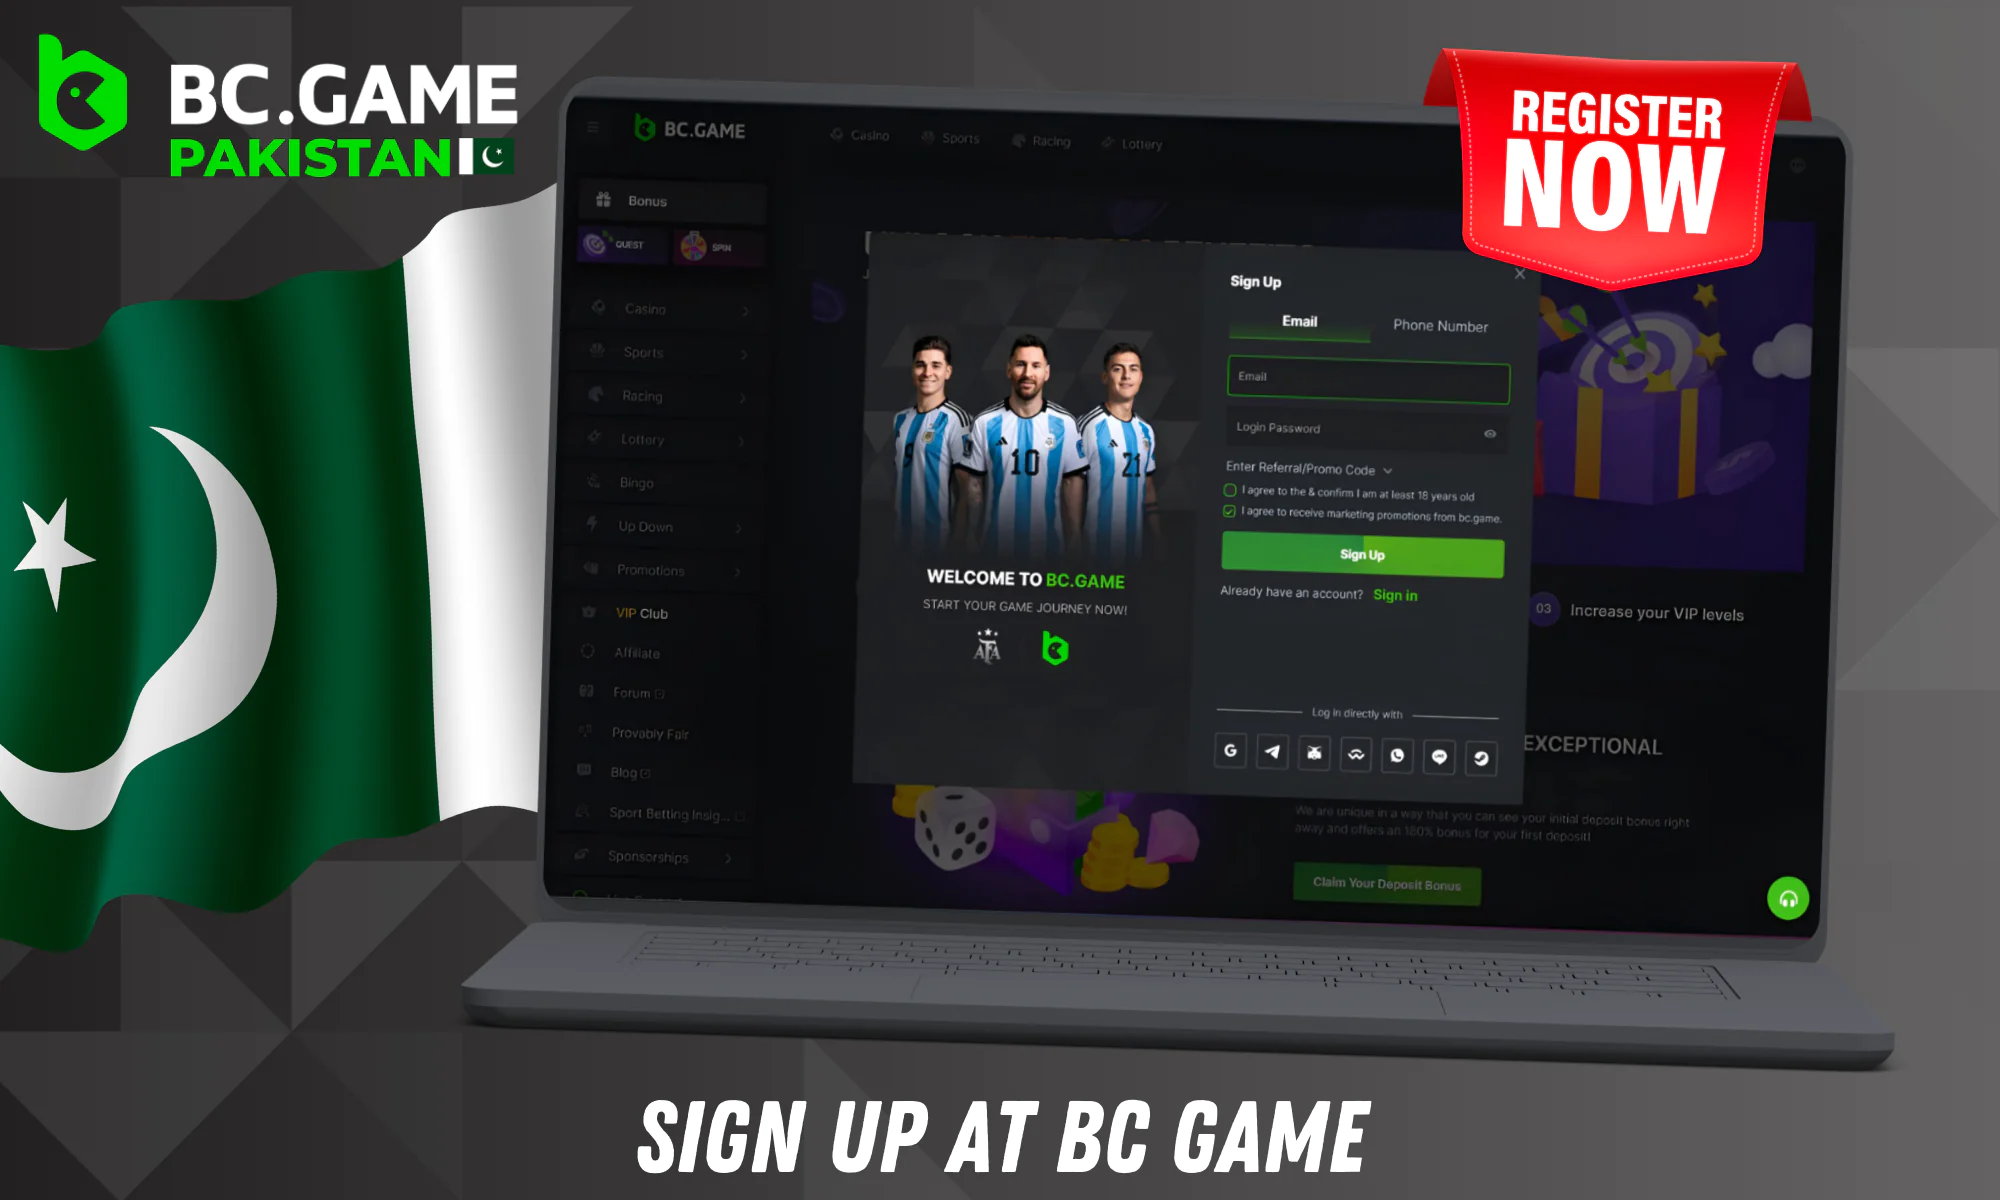 Registration process at BC Game Casino